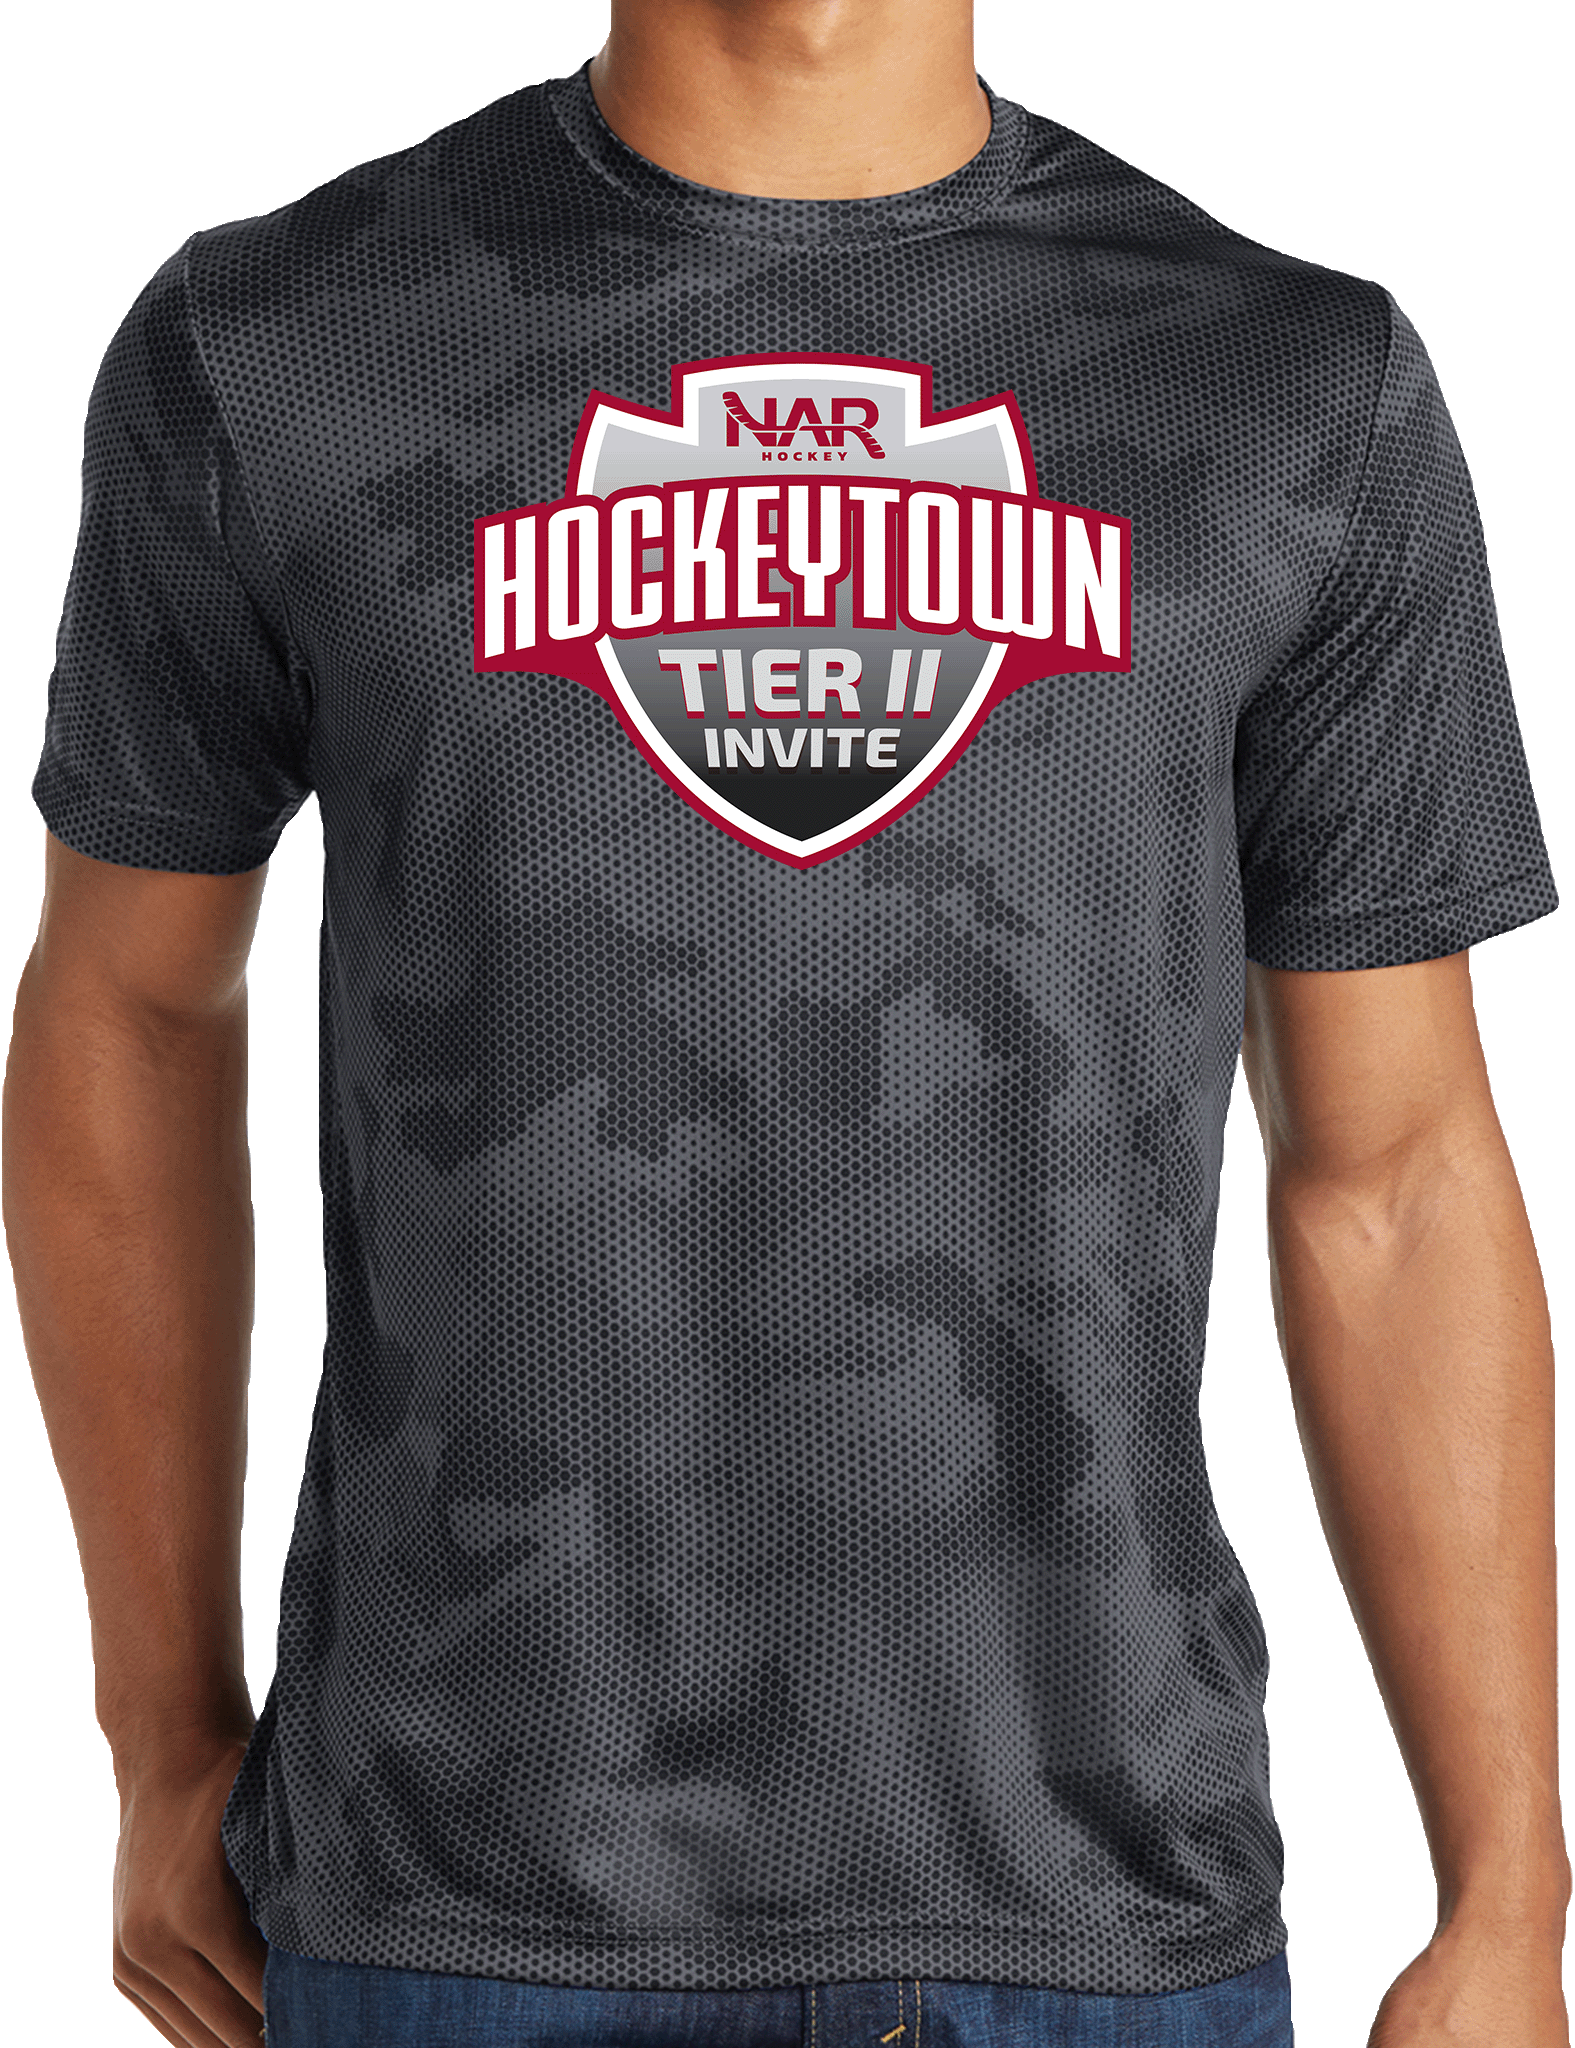 Performance Shirts - 2024 Hockey Town Tier II Invite